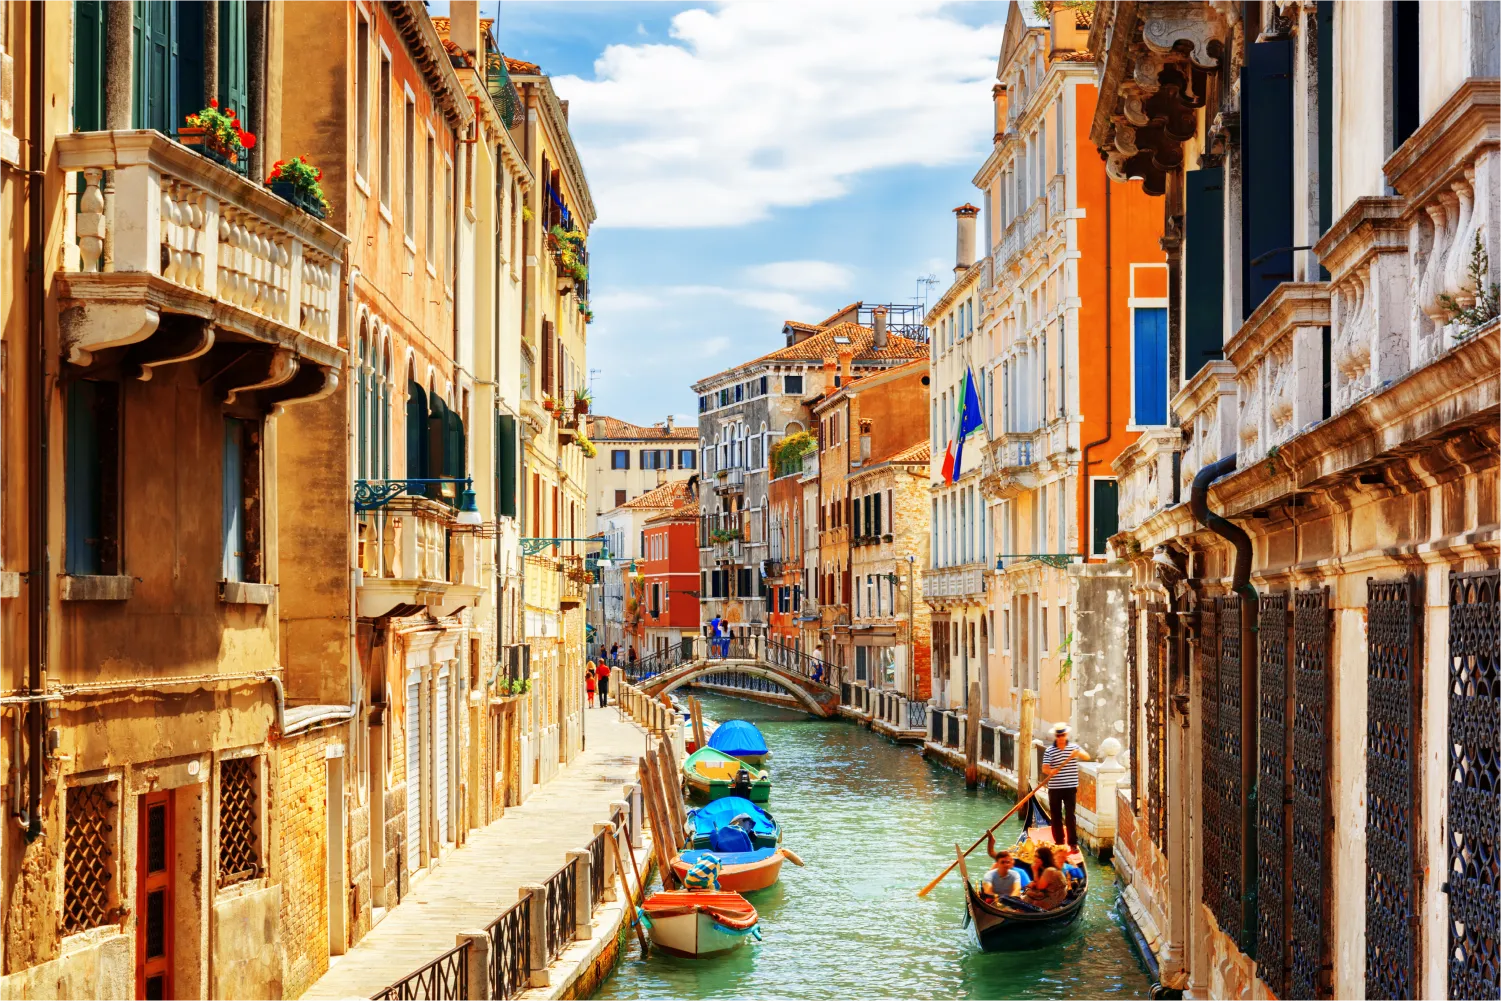 Rio Marin Canal With Boats And Gondolas From The Ponte De La Bergami, Venice